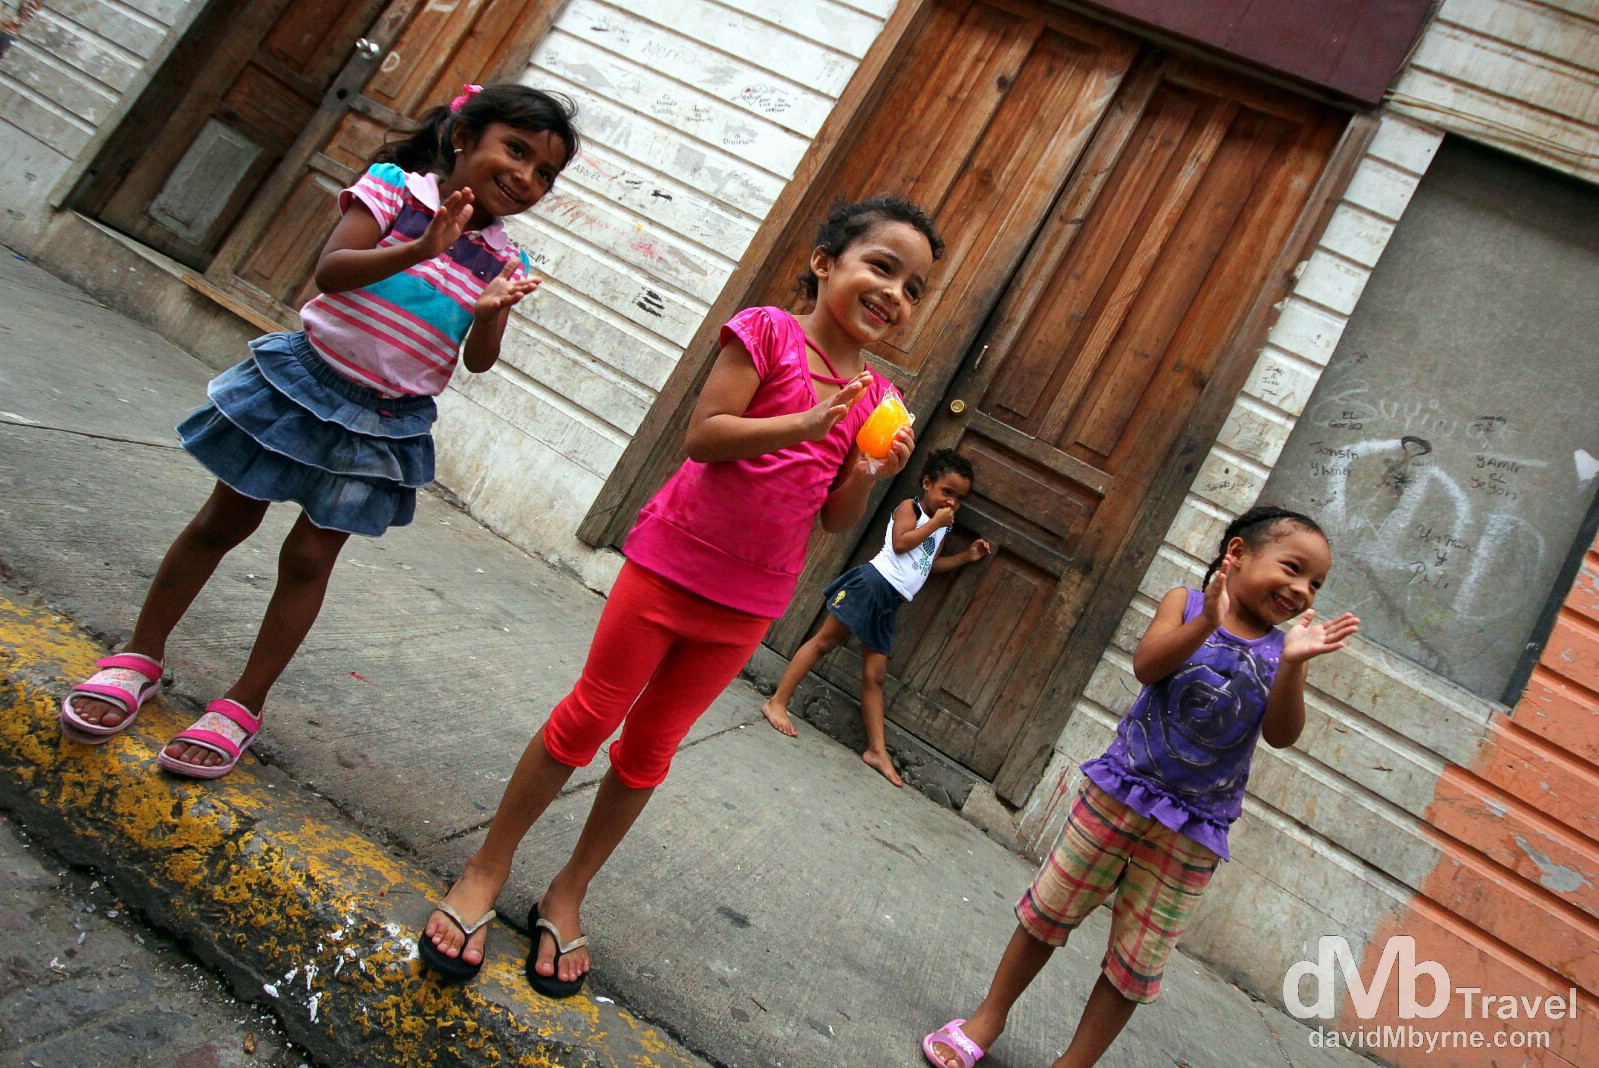 Children on the streets of Casco Viejo, Panama City, Panama. July 1st 2013.